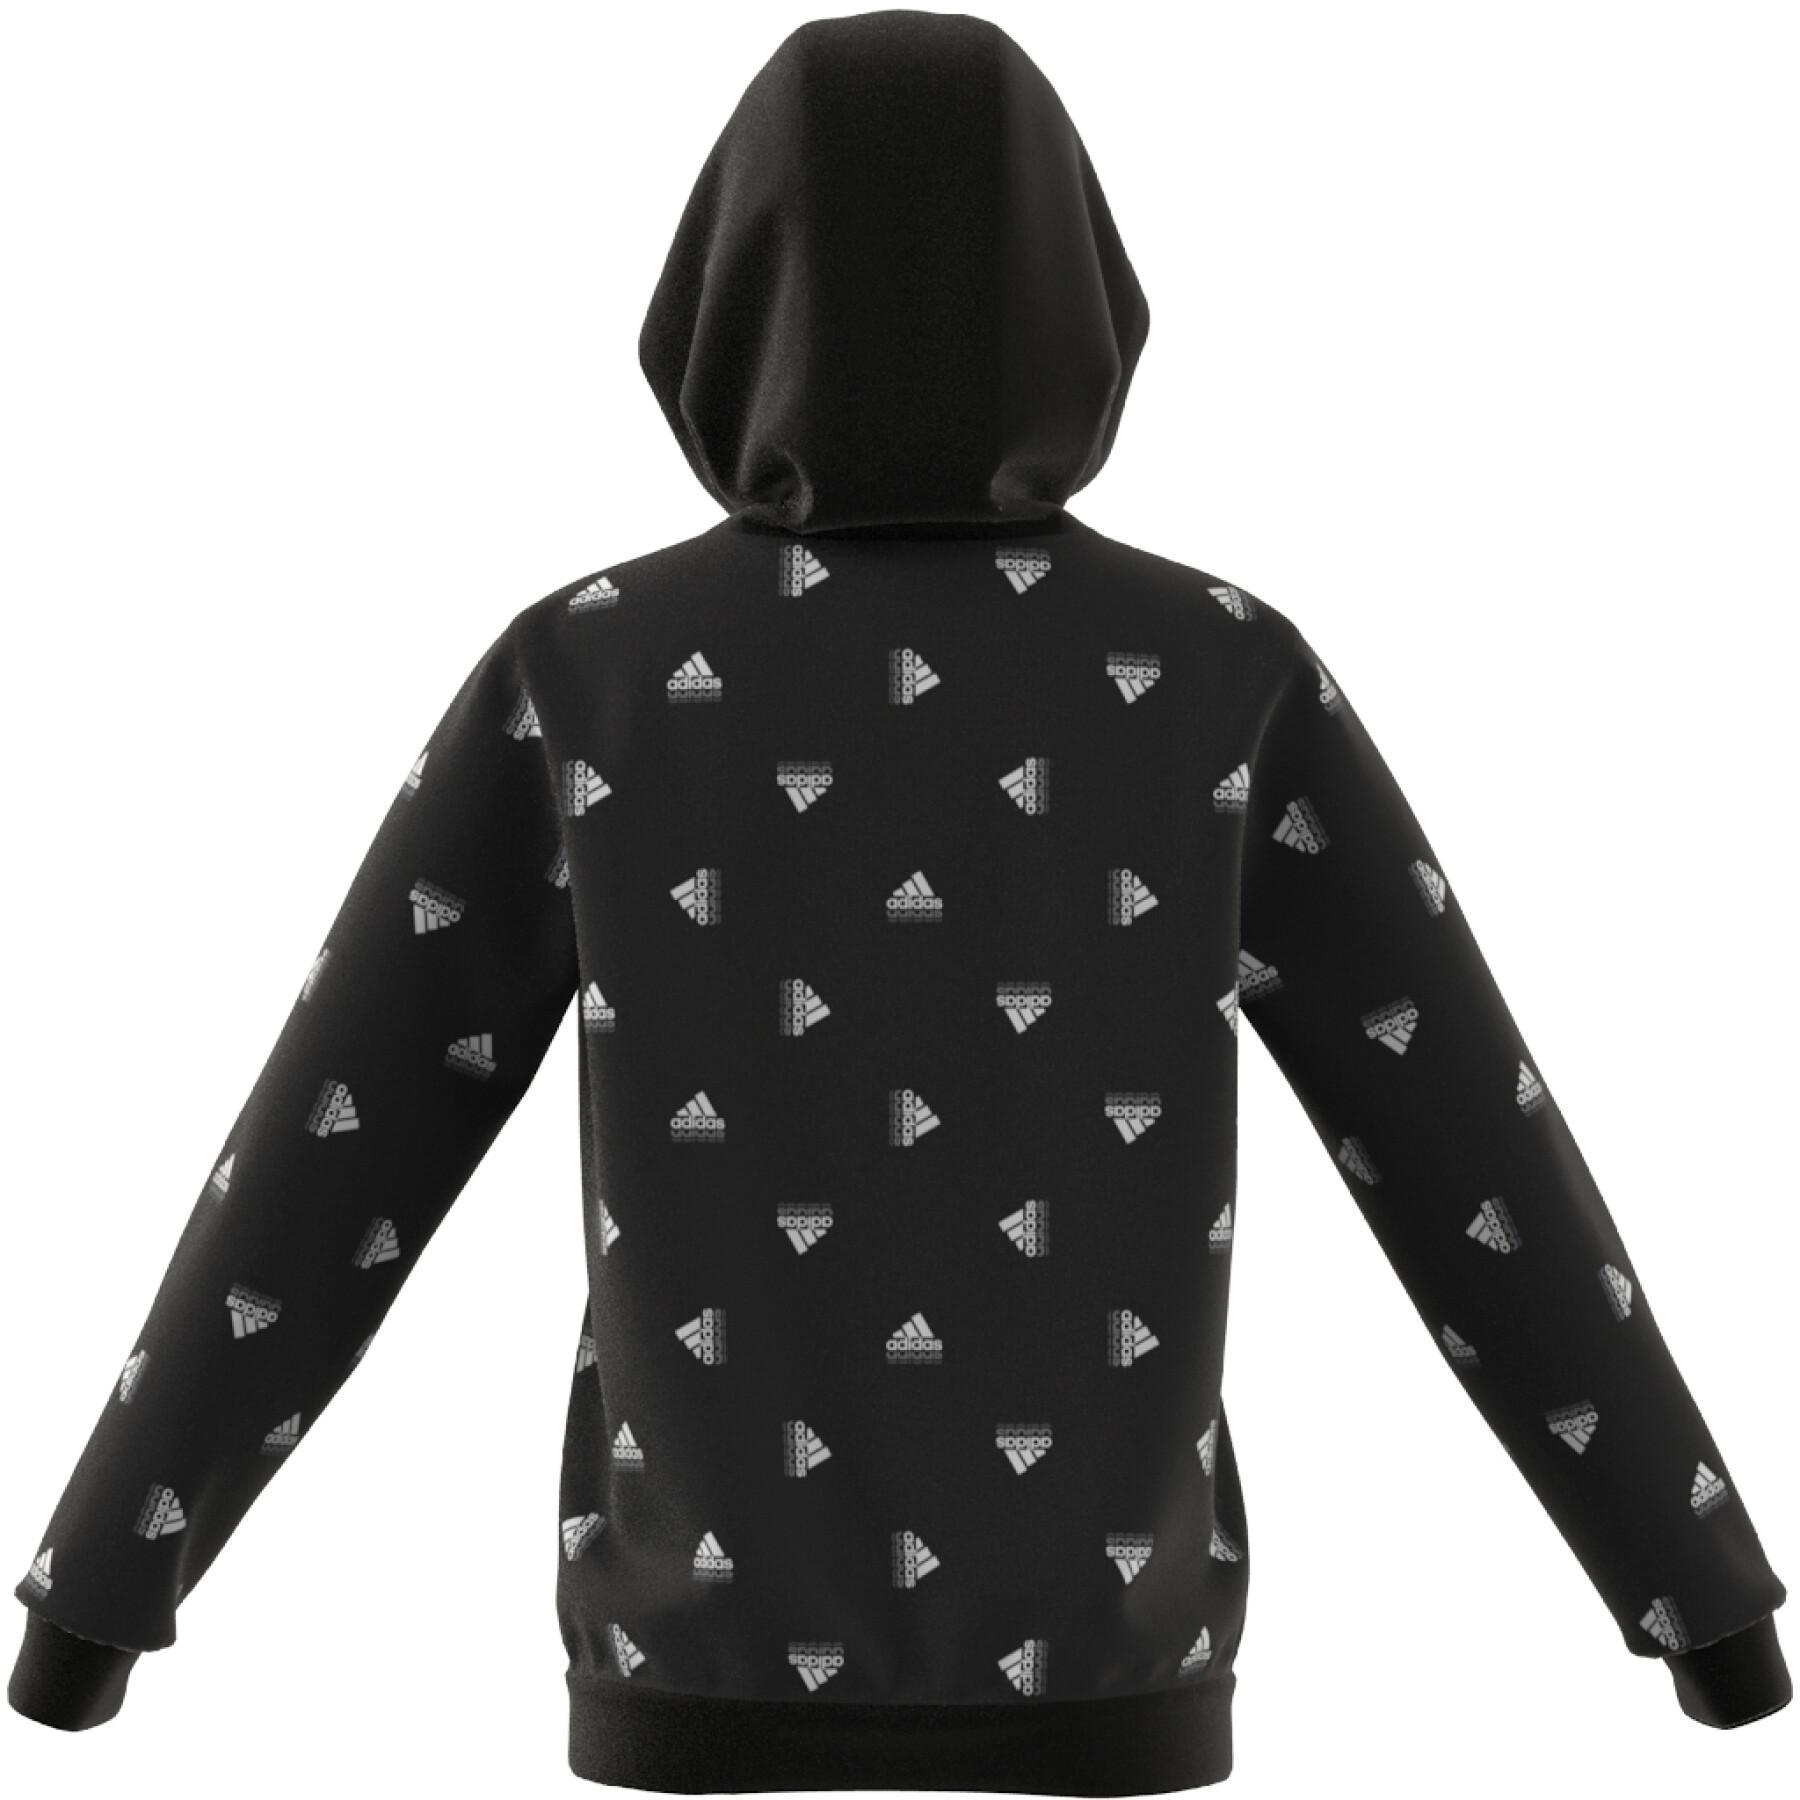 organ skuffe Ambassade Sweatshirt hoodie printed on the child's outfit adidas Brand Love - adidas  - Brands - Volleyball wear